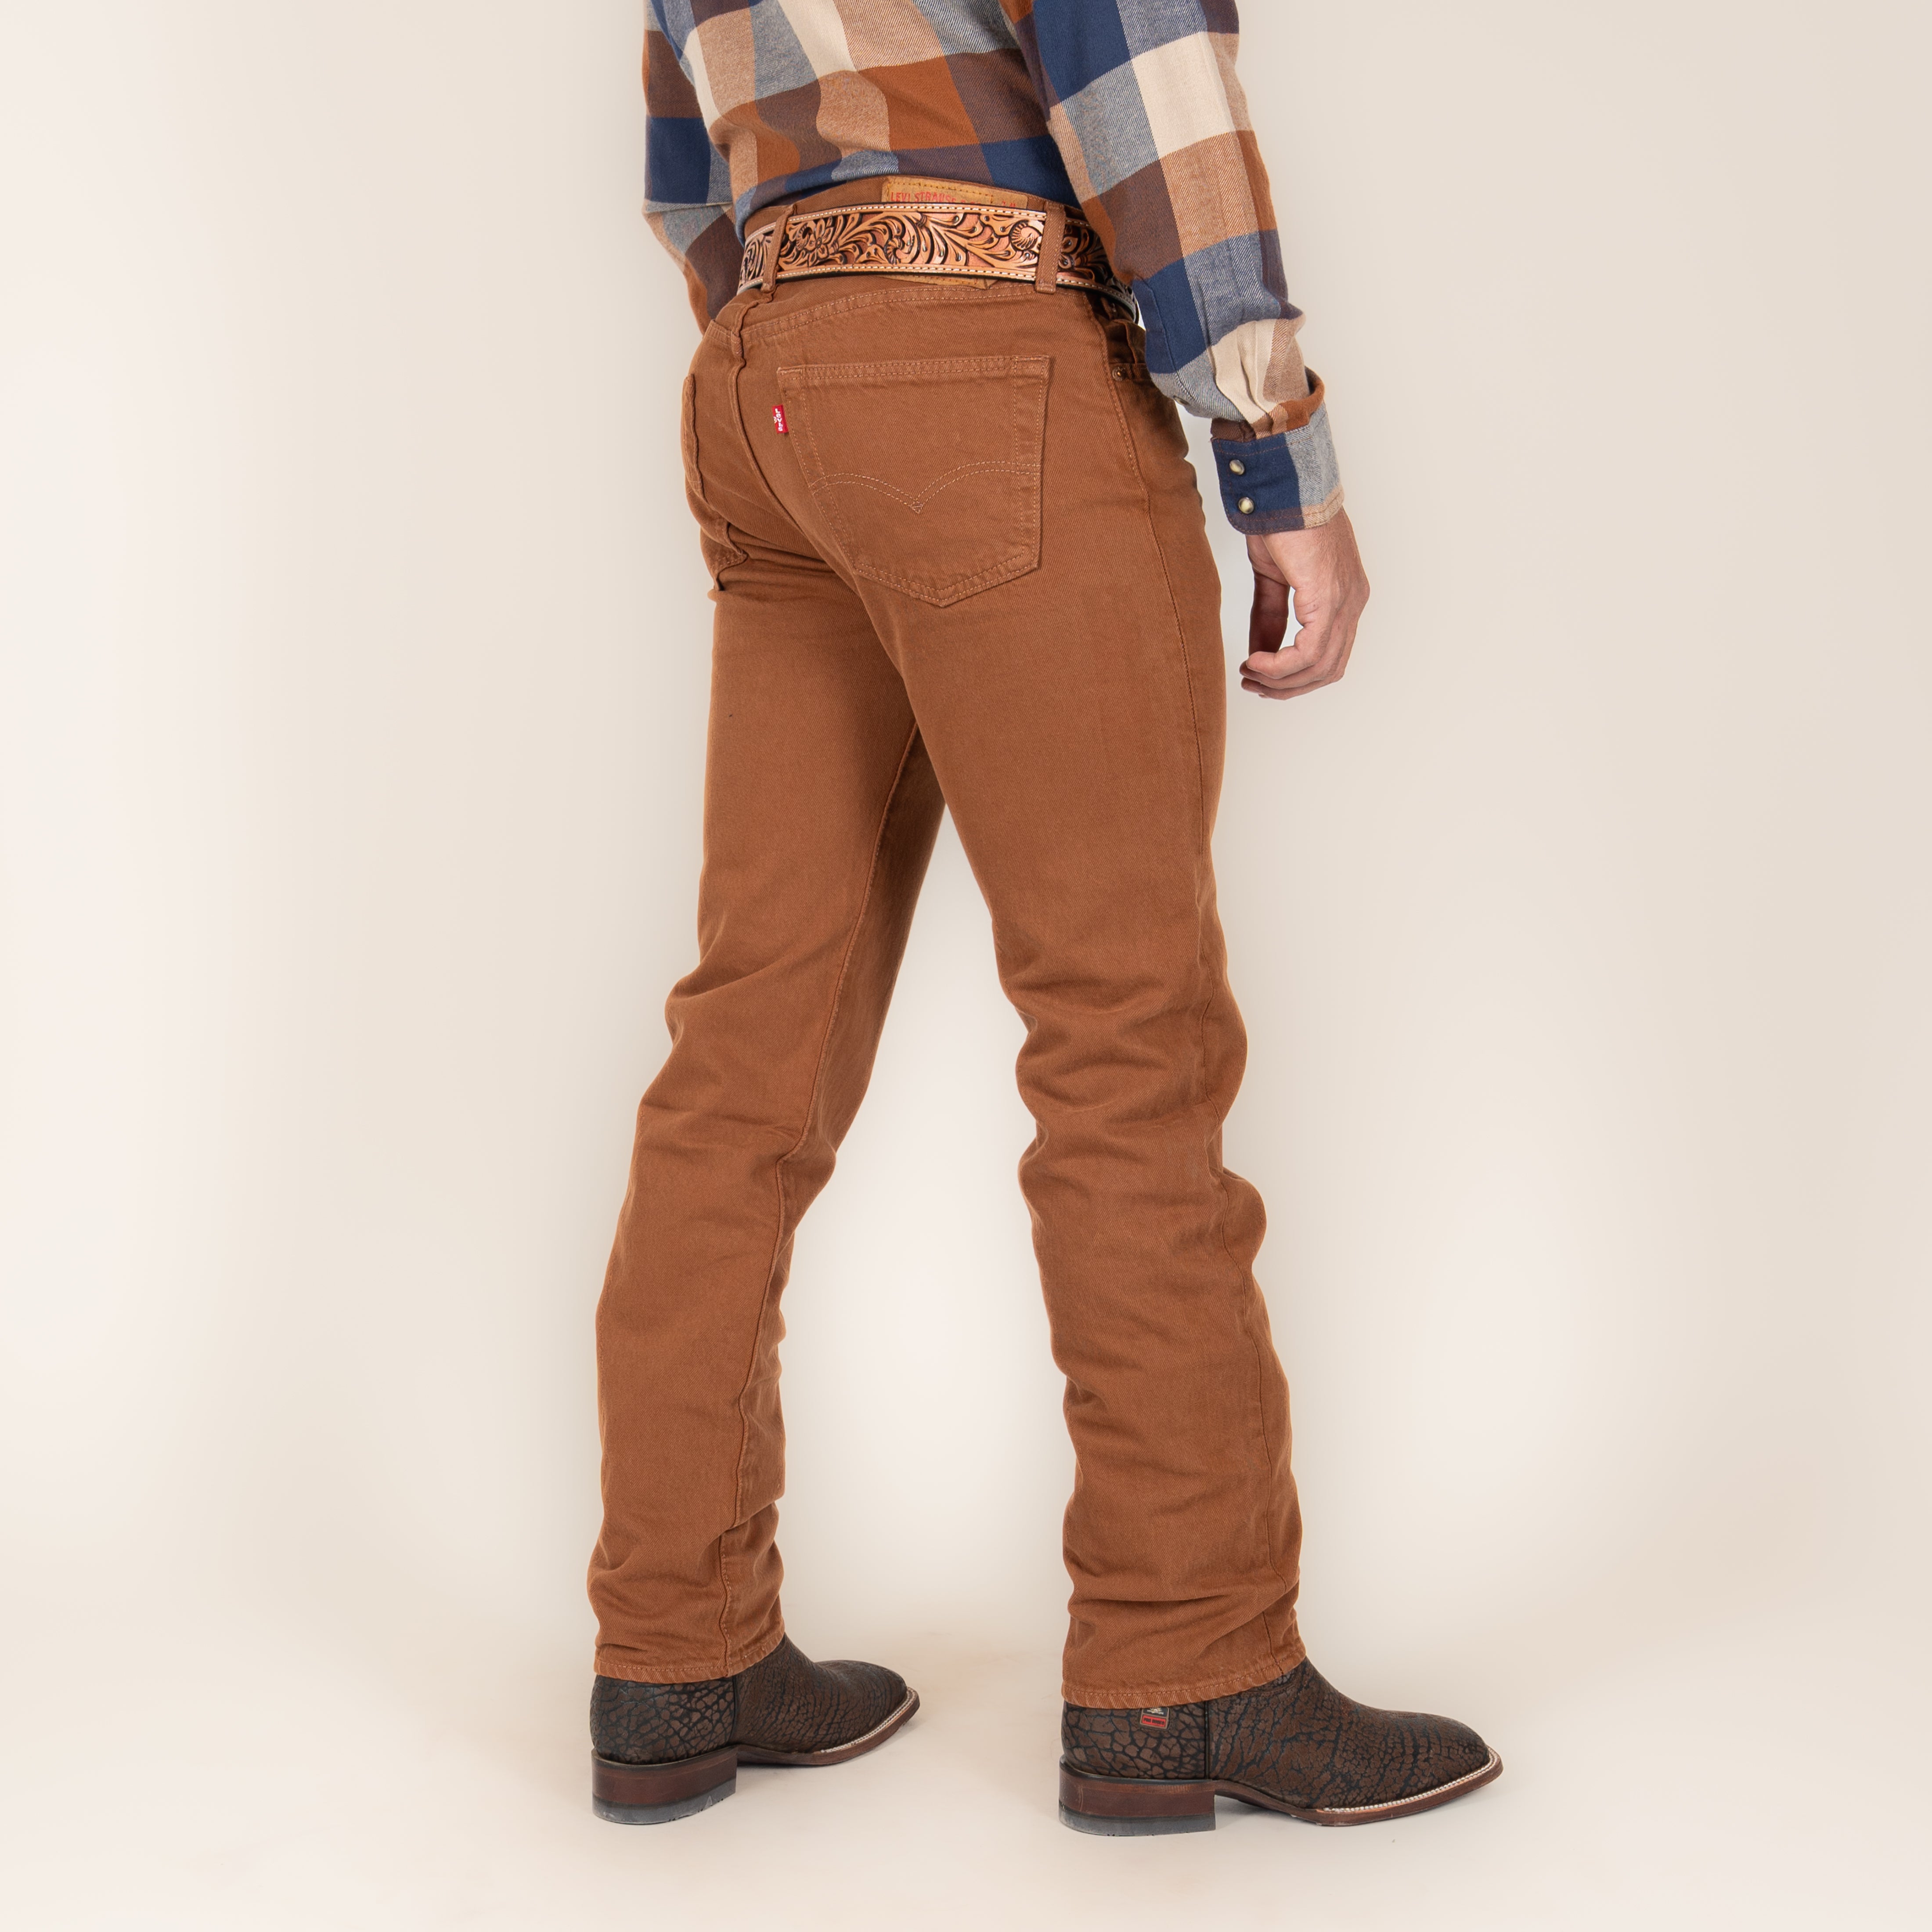 Jeans Levis 501 Brown Caballero